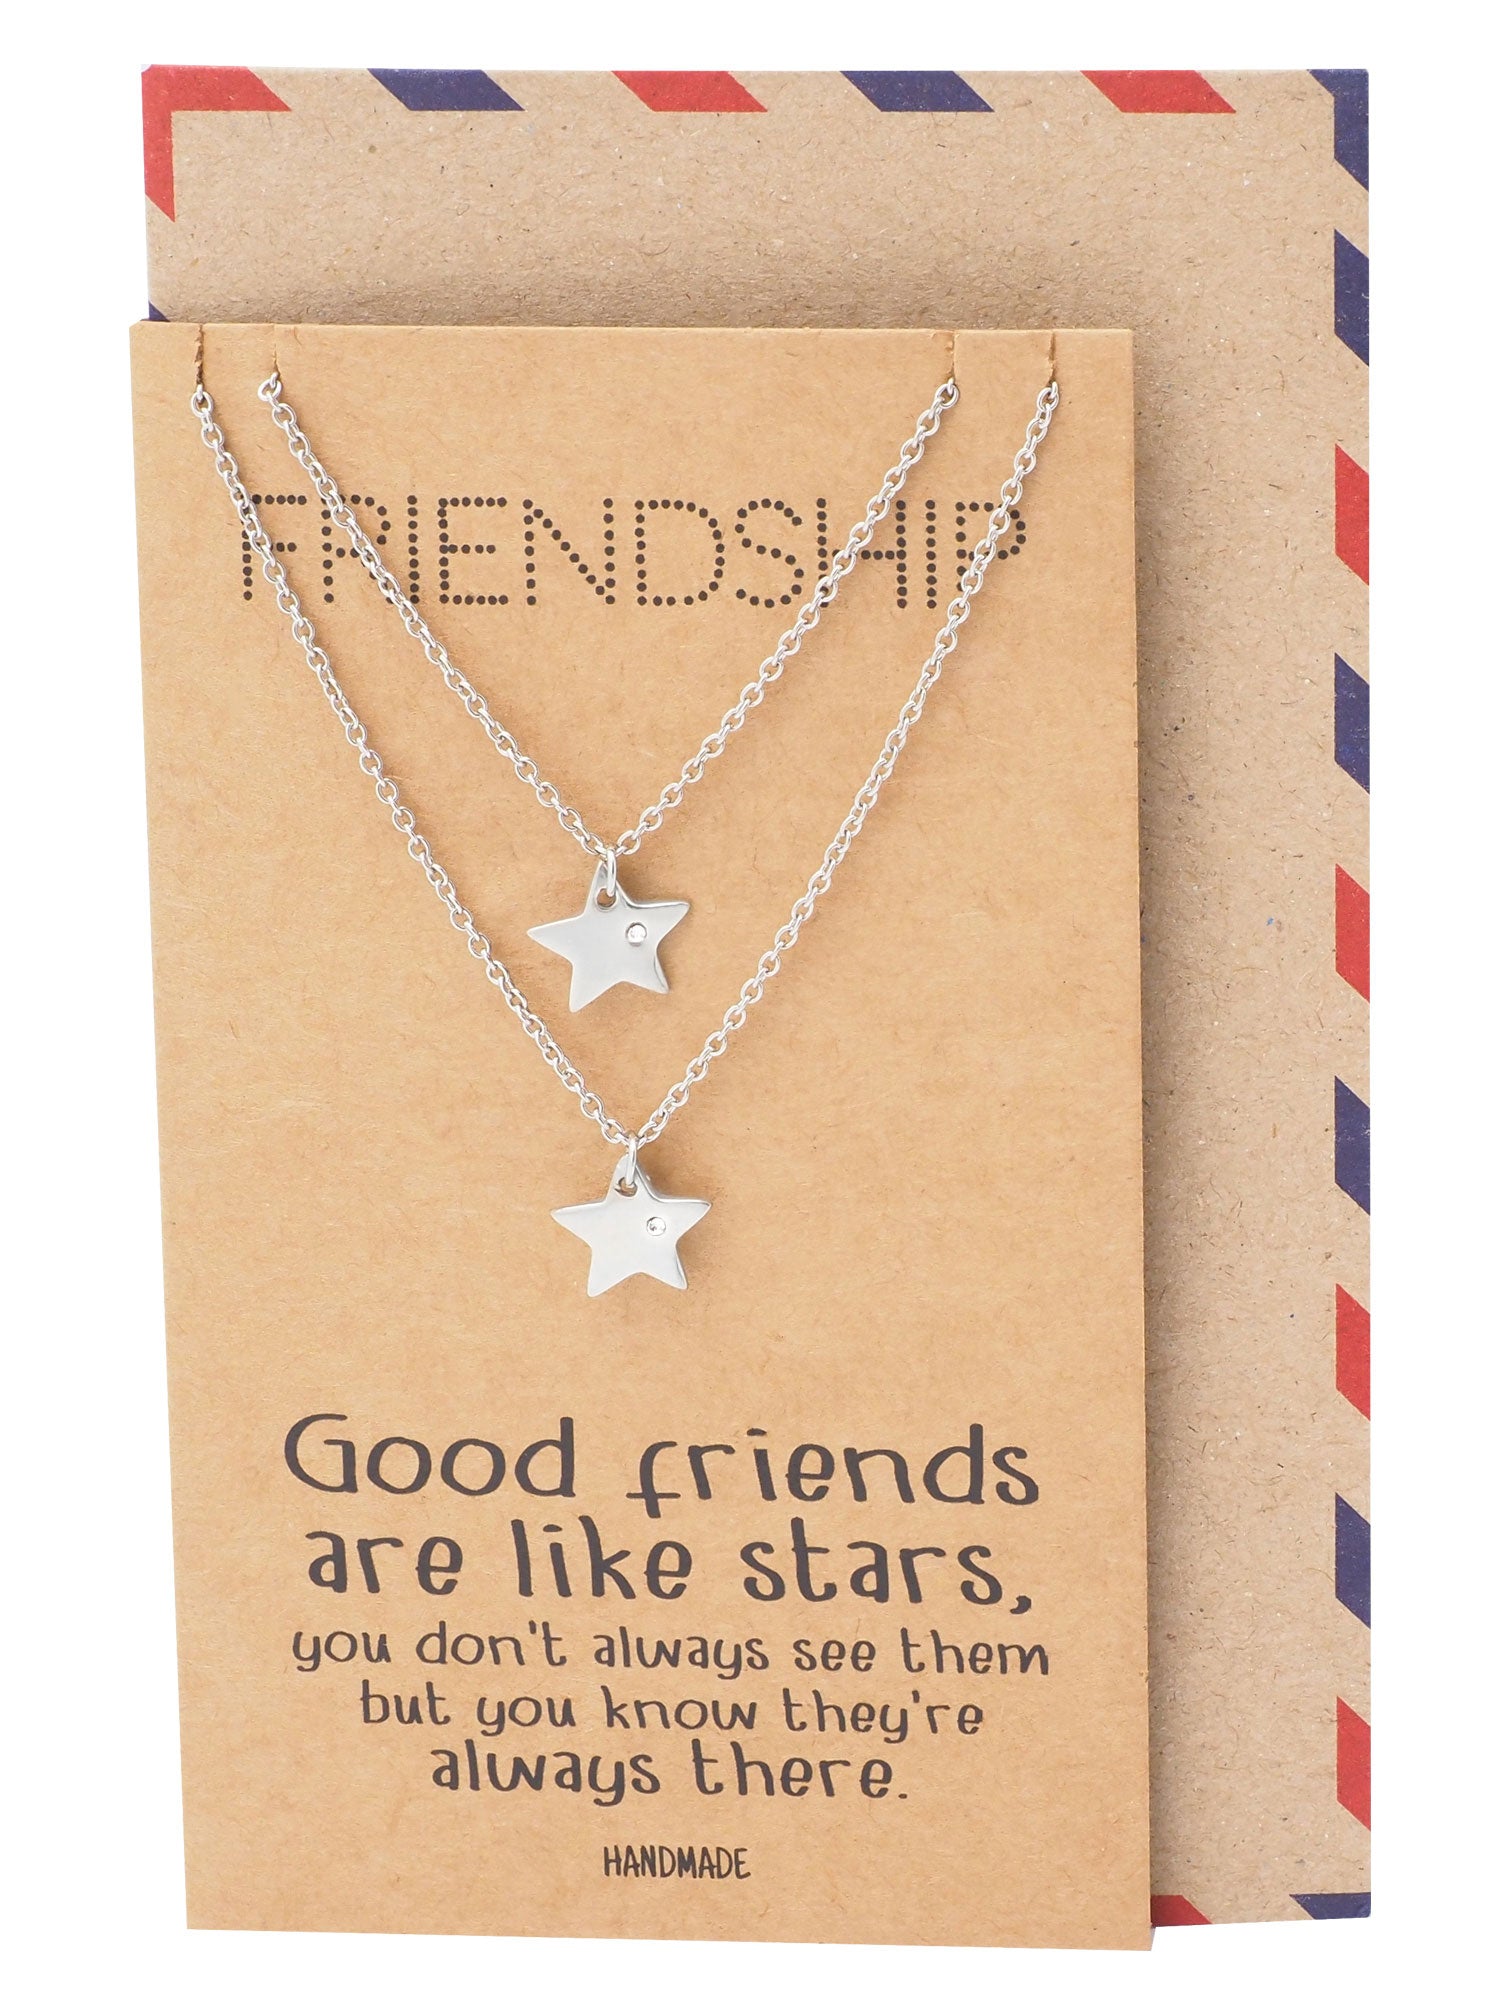 Friendship Necklace, Cheese Necklace, Best Friends Necklace, BFF Gift, 3D  Tiny Cheese Necklace, Food Jewelry, Minimalist, Modern Jewelry | Wish